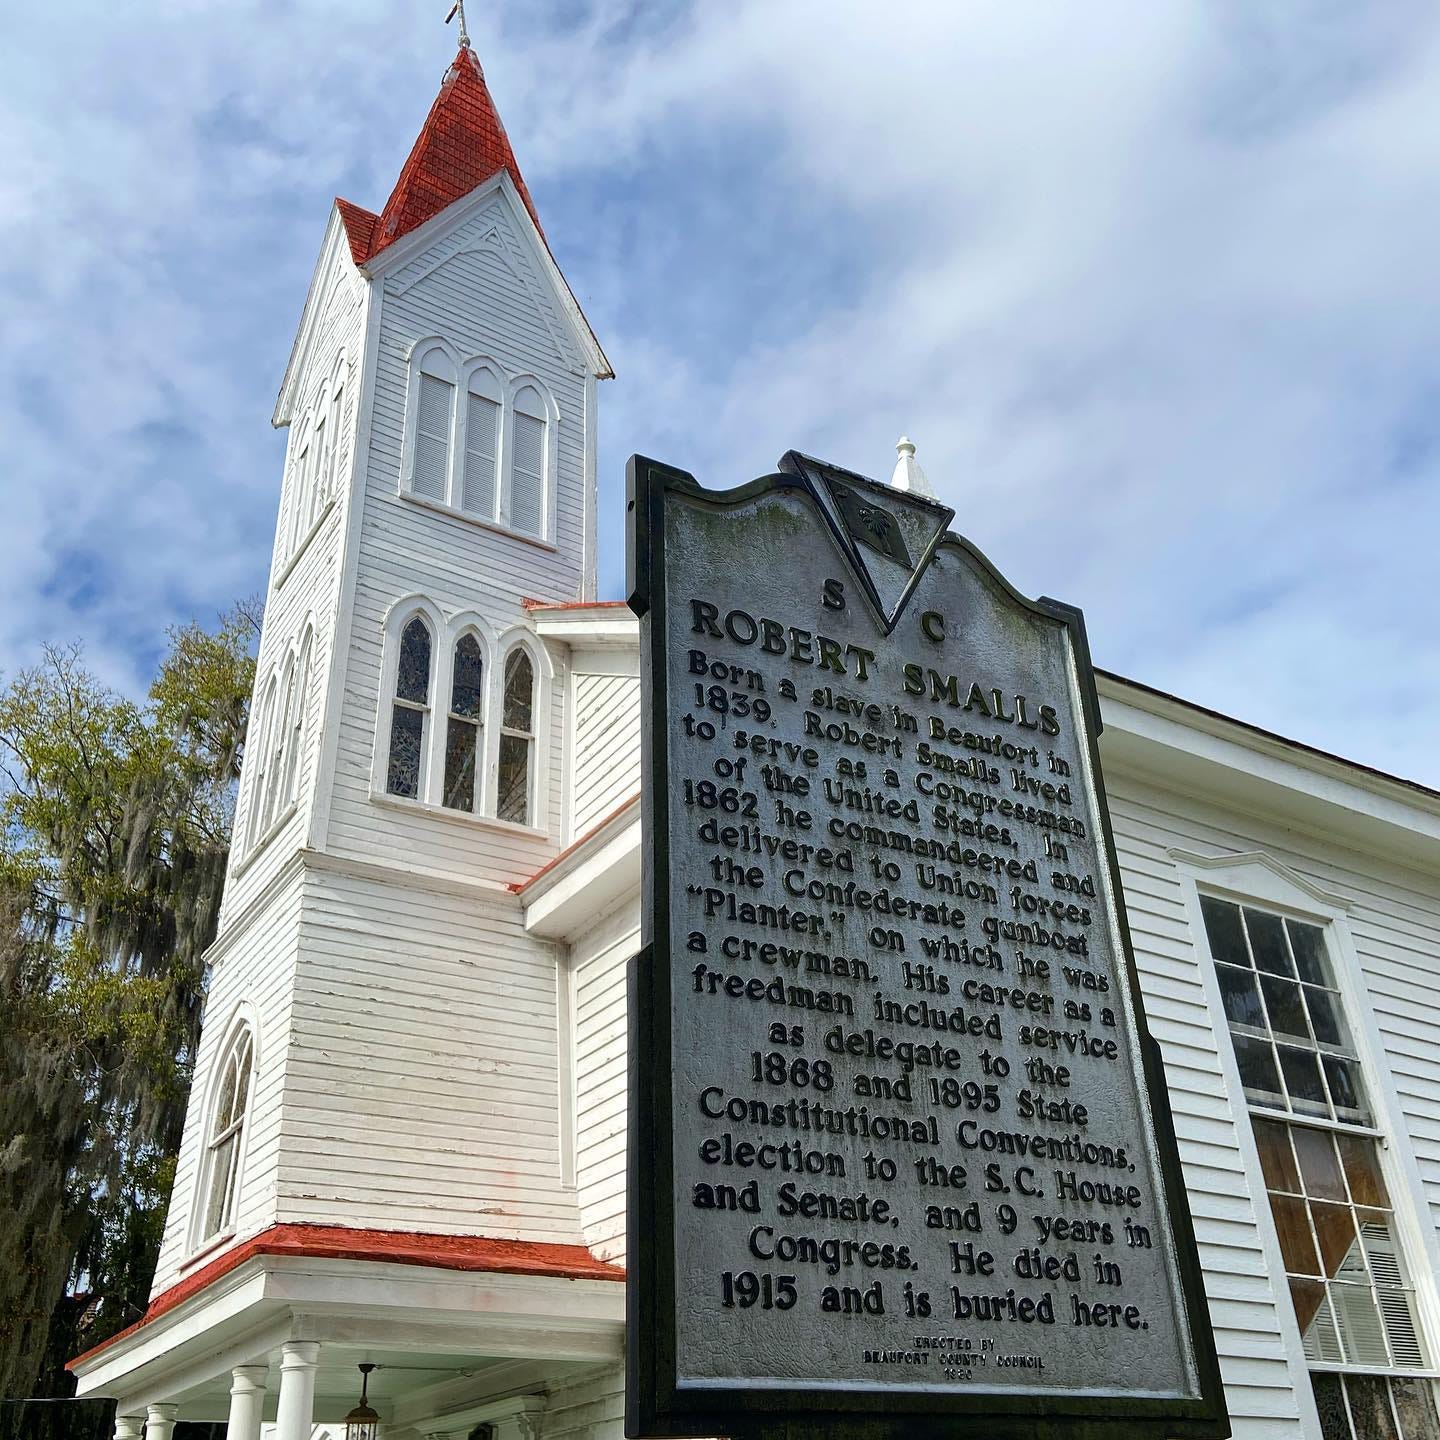 Tabernacle Baptist Church and Robert Smalls memorial sign; Beaufort, South Carolina; Author Photograph November 21, 2020